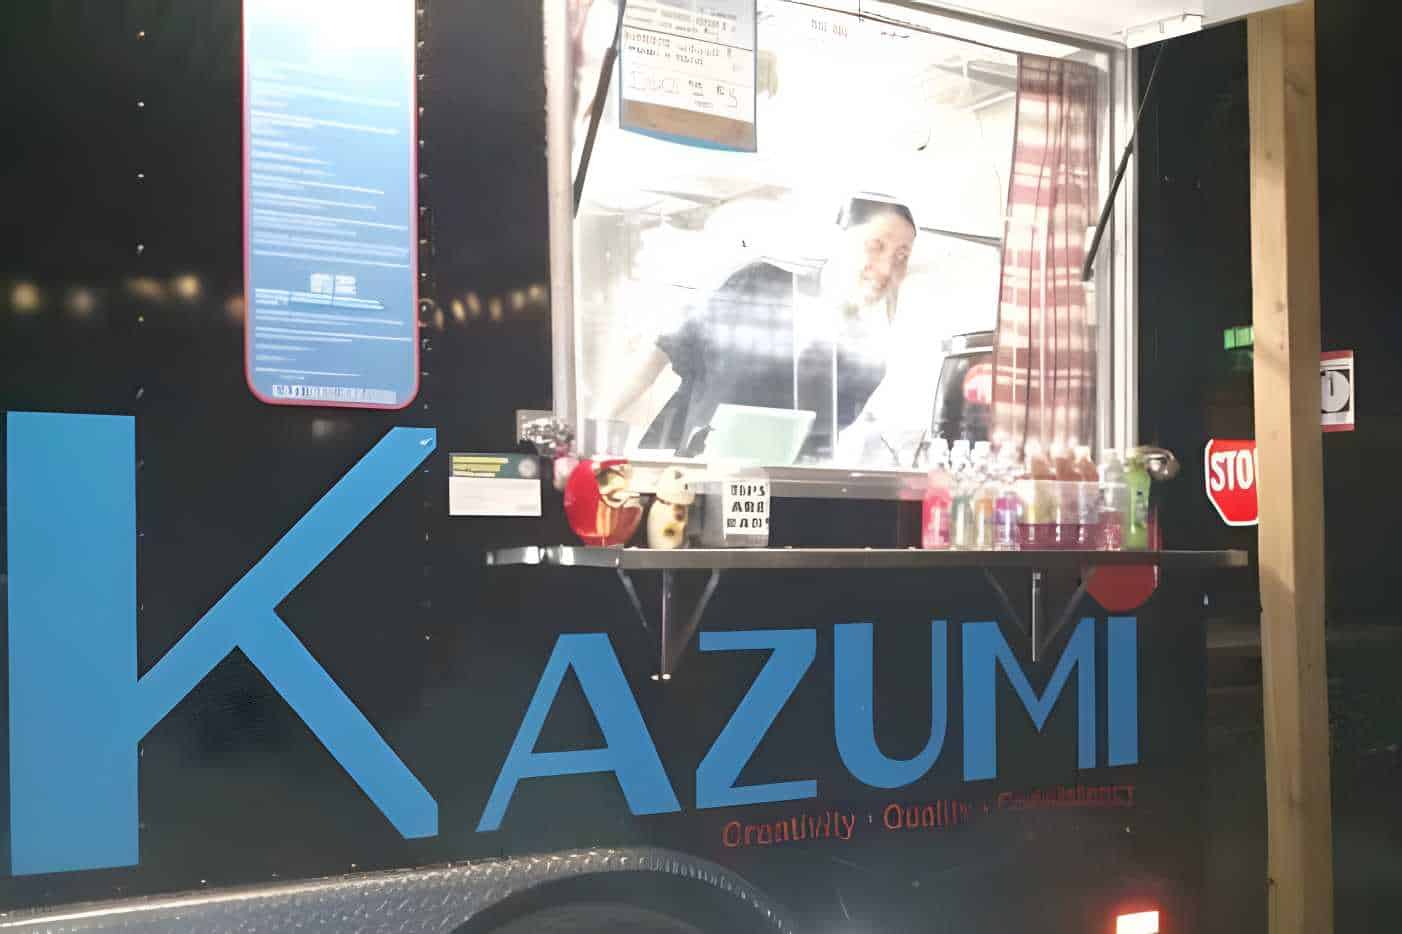 Kazumi Best Sushi Restaurants in Portland, OR